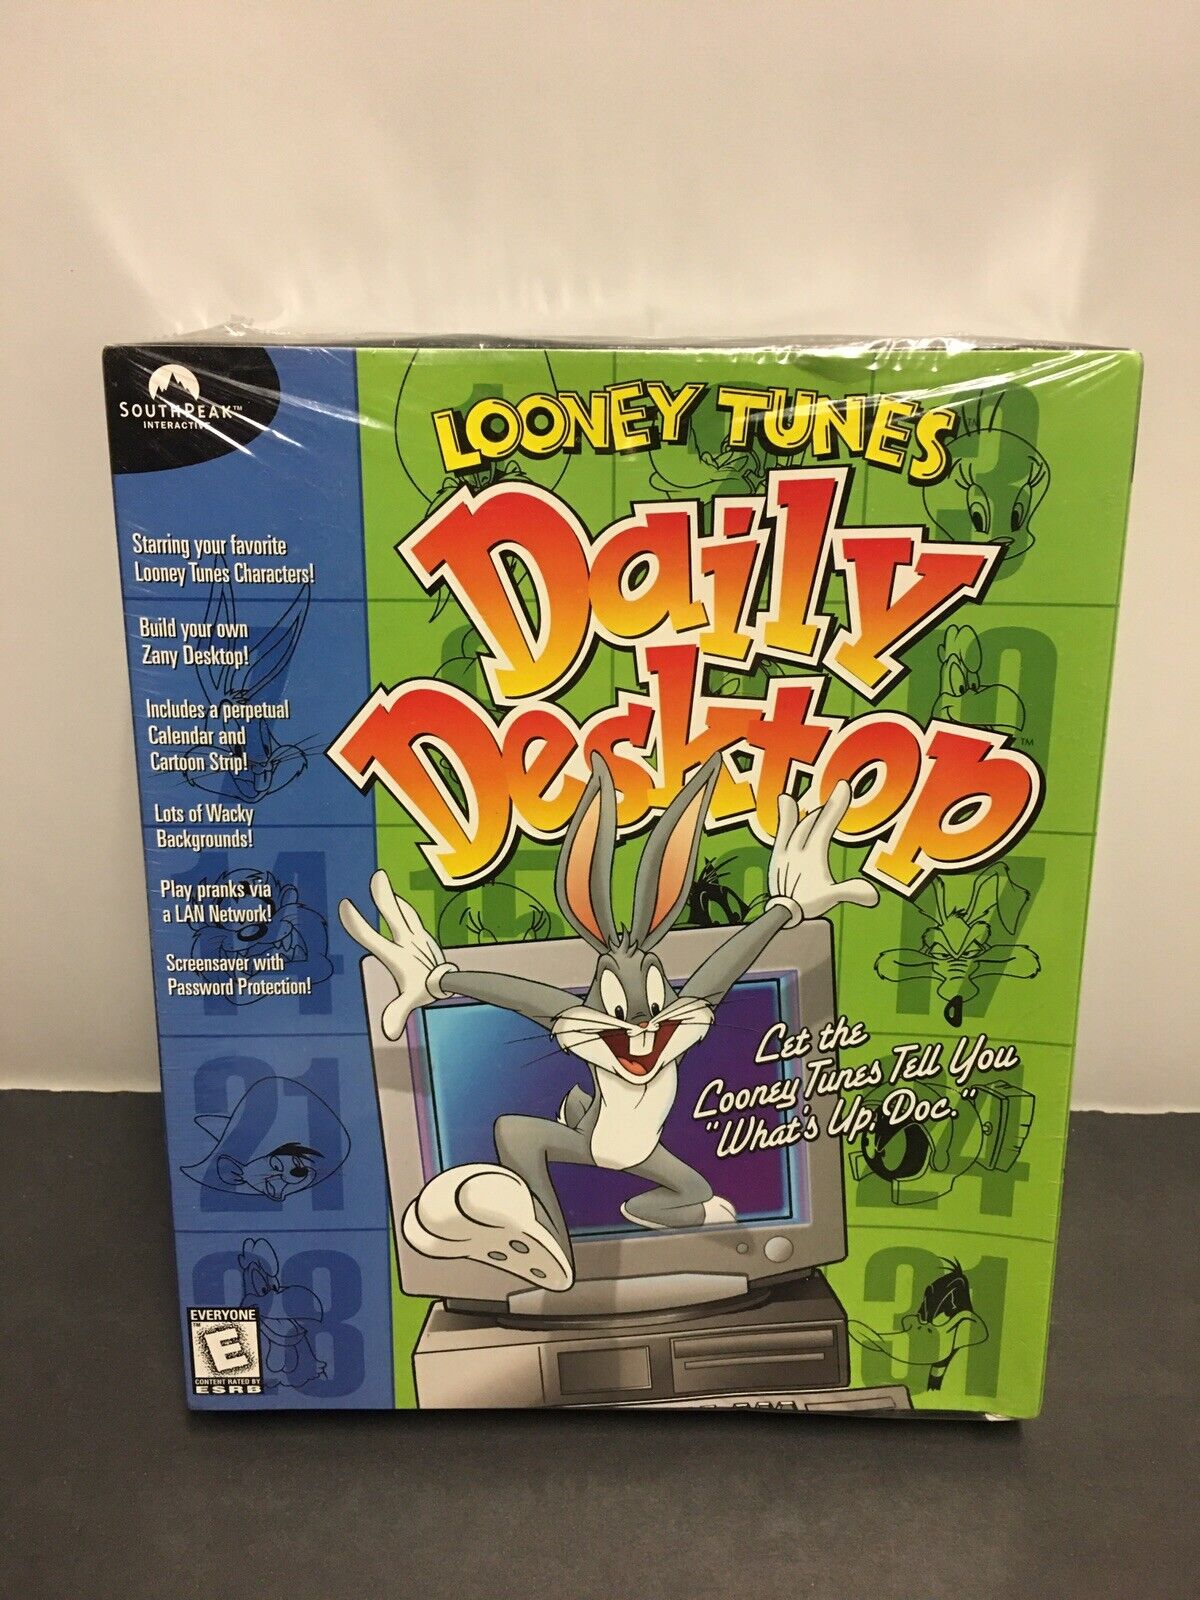 Vintage Looney Tunes Daily Desktop Southpeak Platform Windows 95/98 CD-ROM